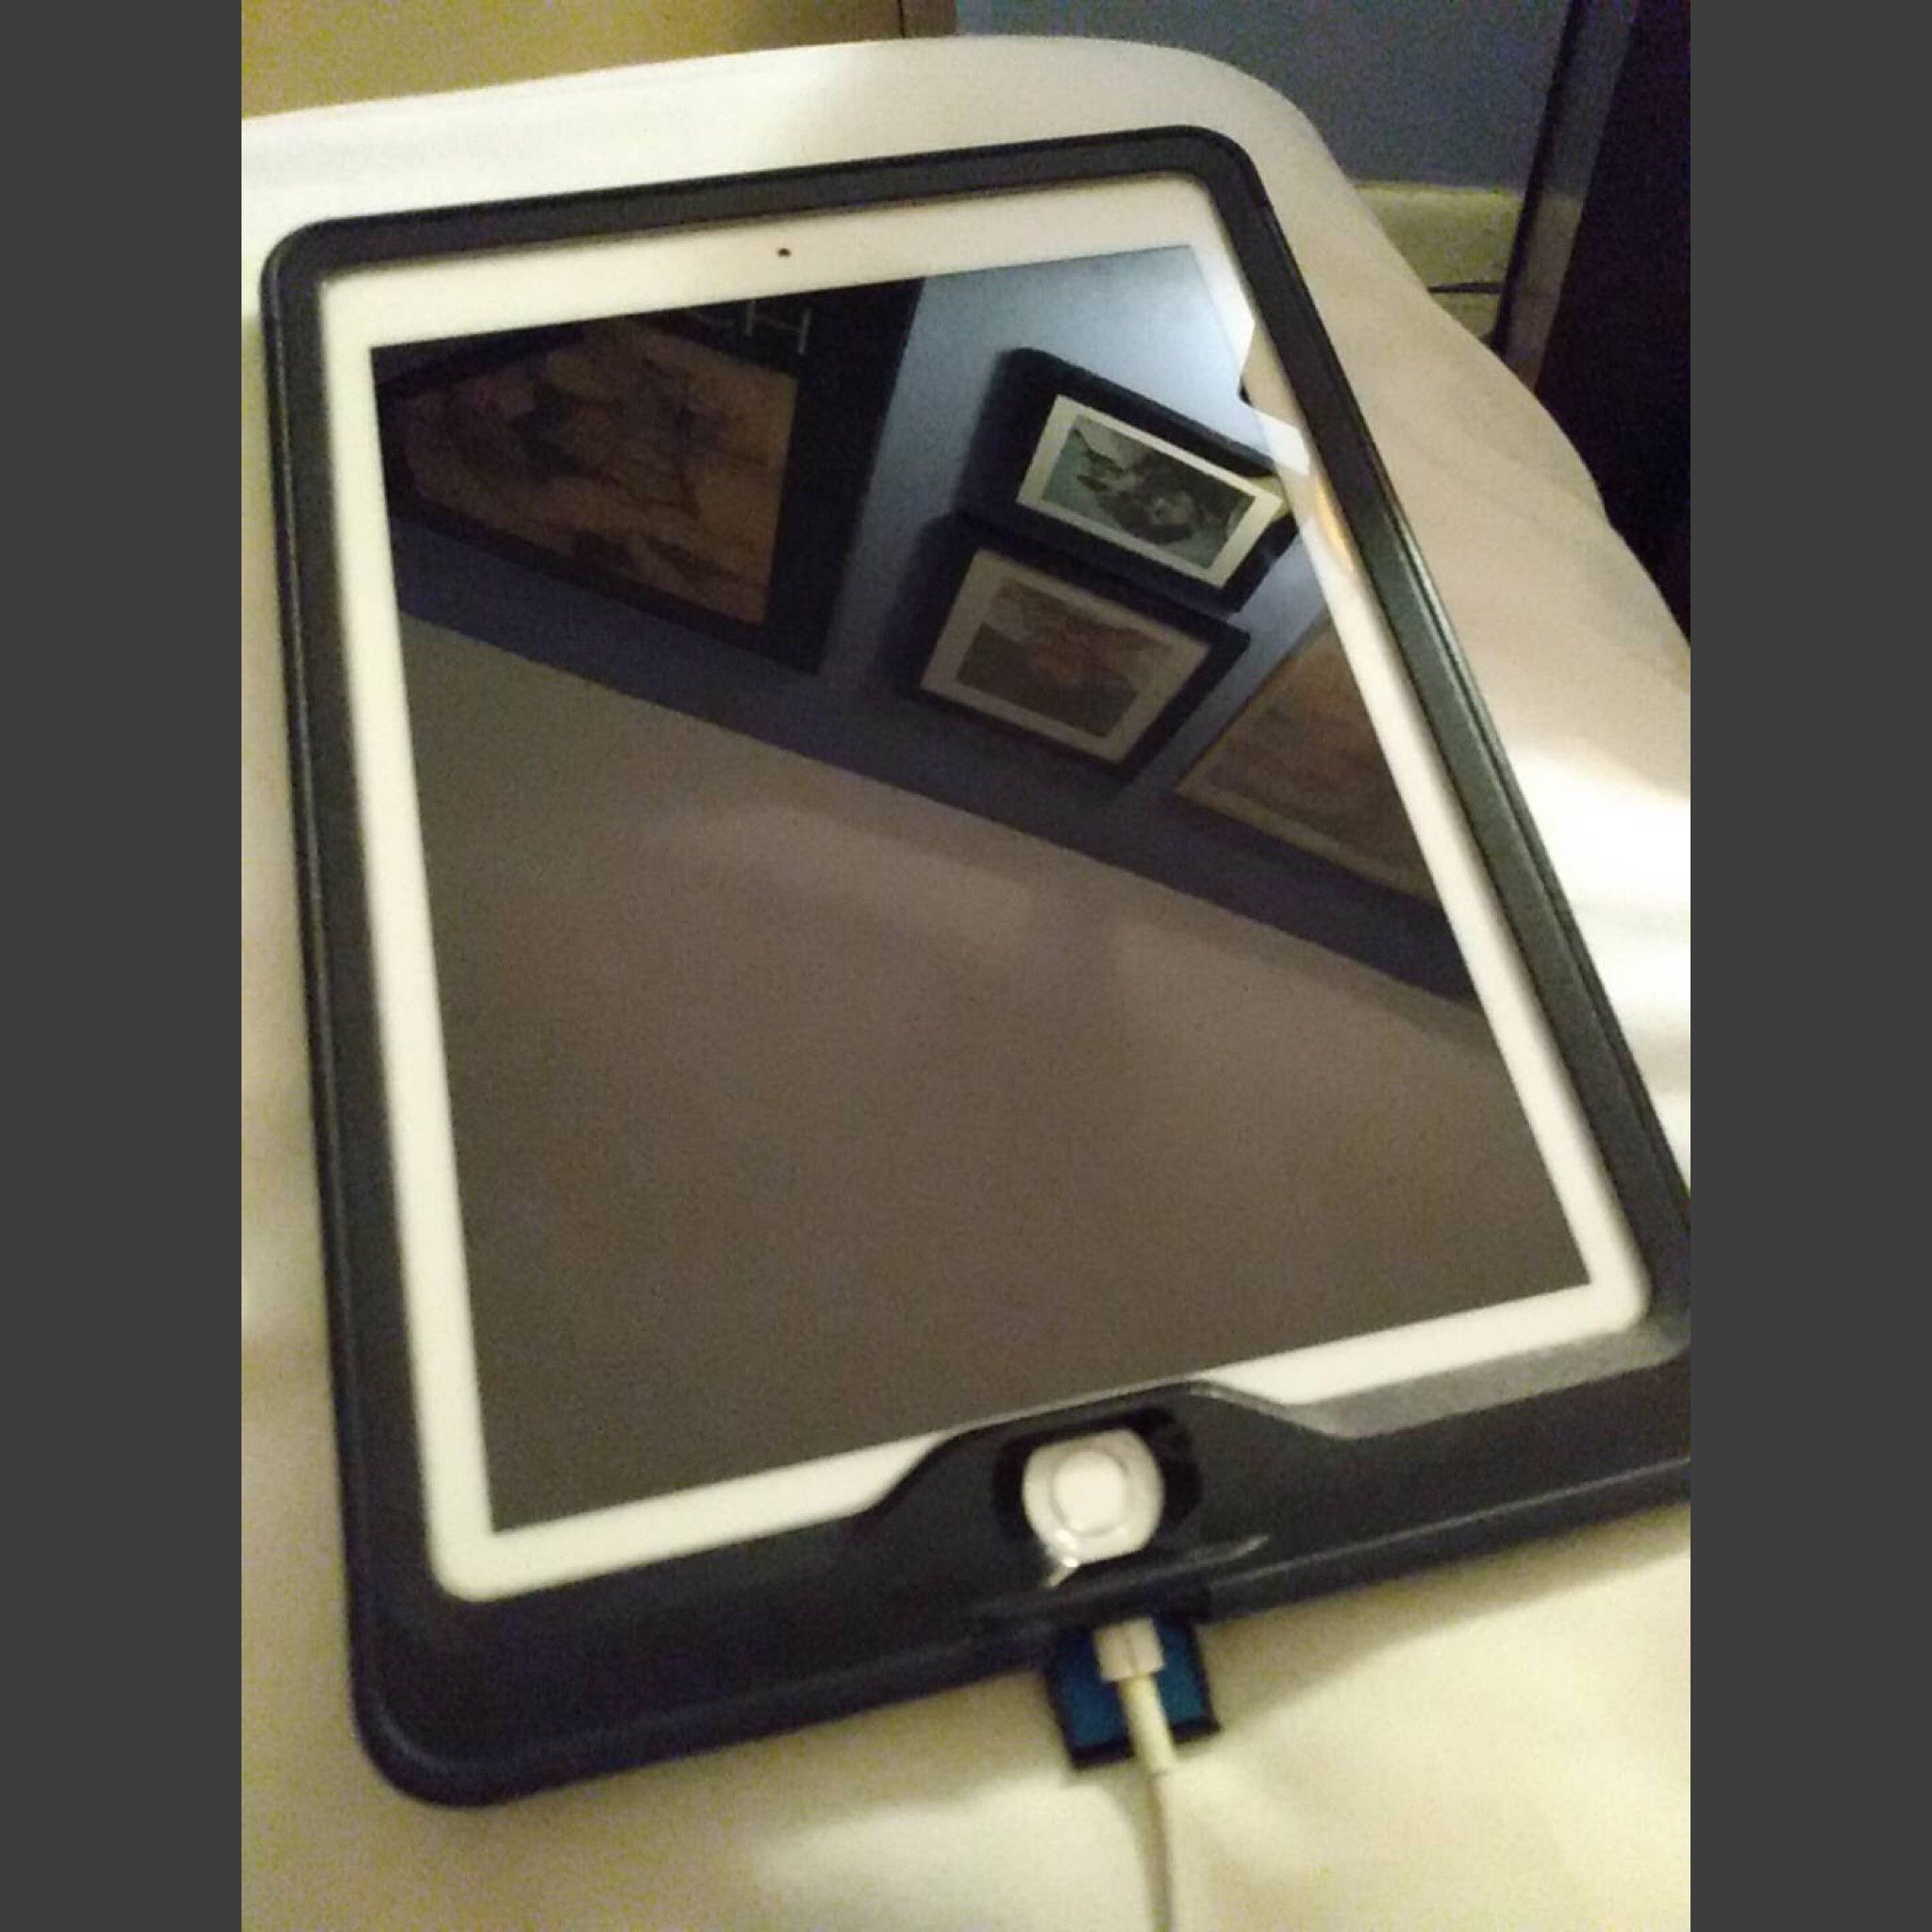 iPad Pro A1673 256gb w/ Lifeproof NUUD Waterproof Case